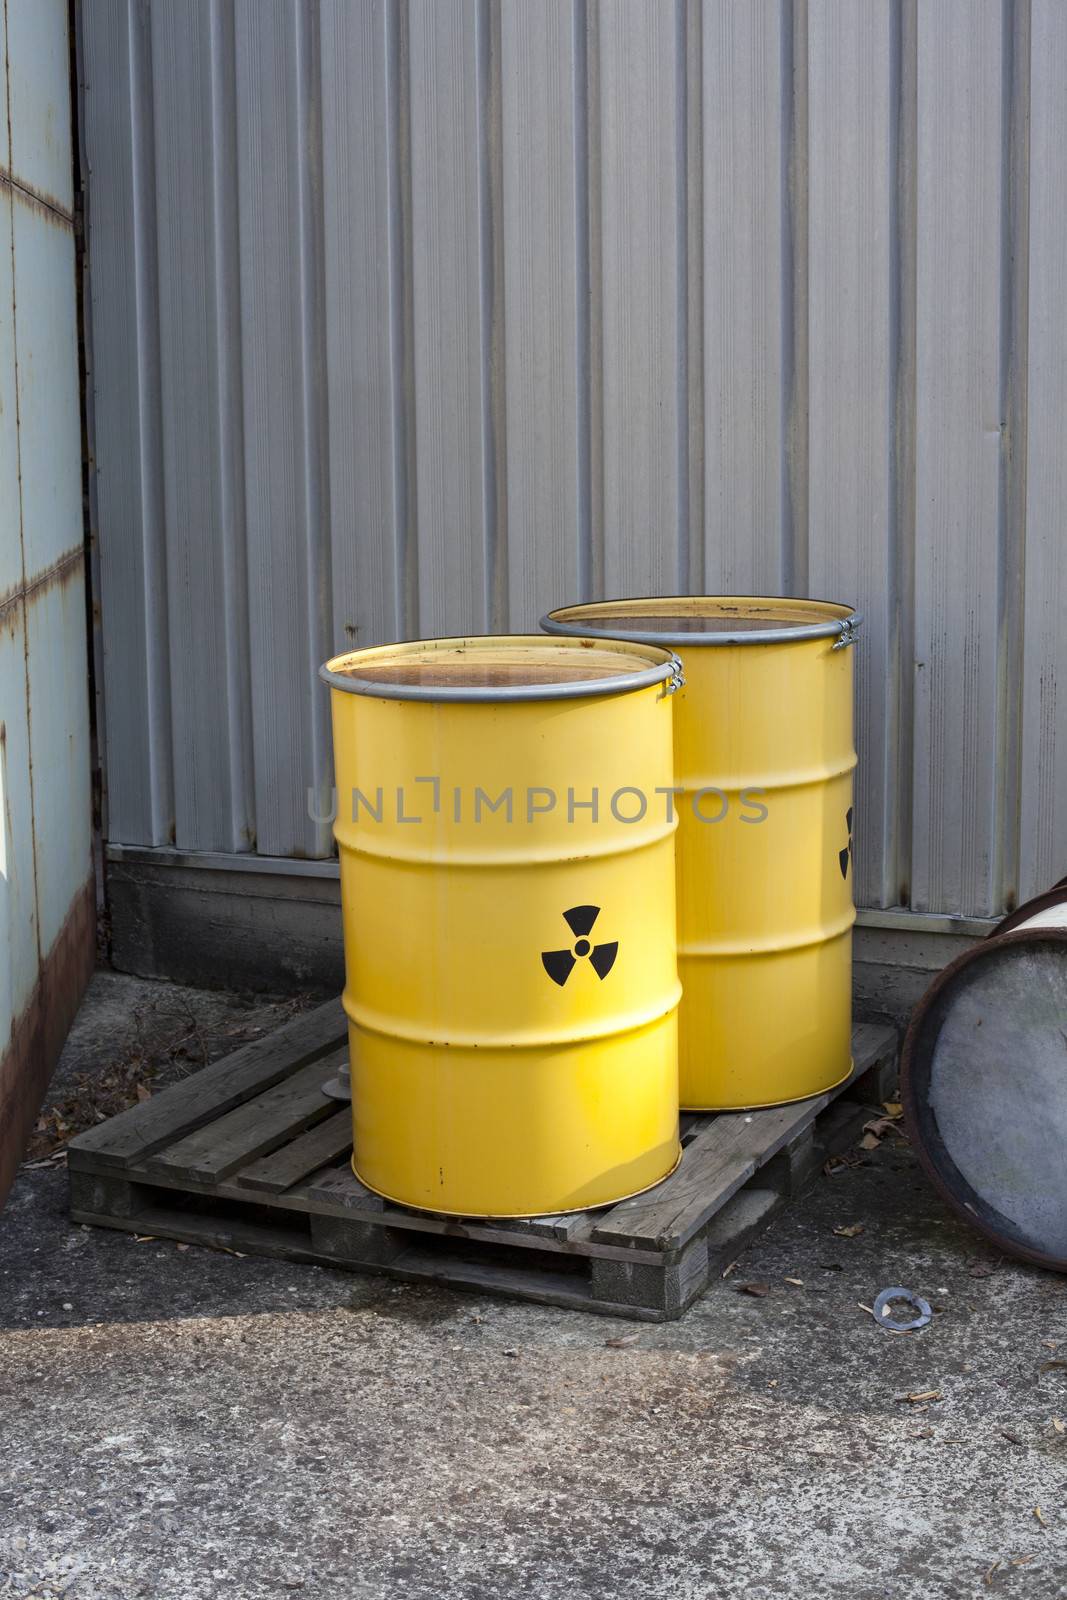 Barrels with radioactive waste disposal